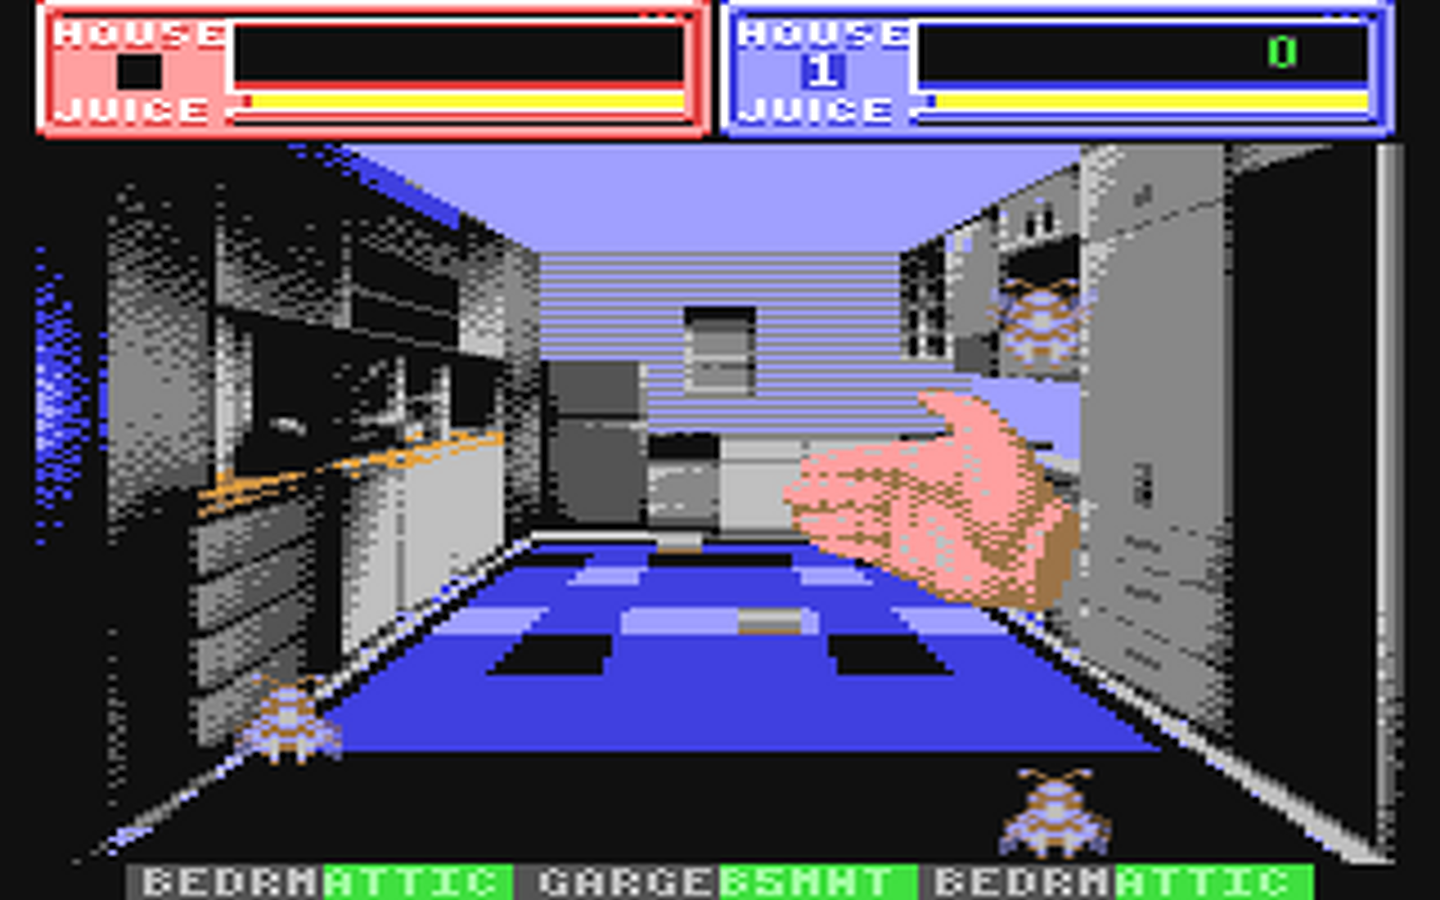 C64 GameBase Exterminator Audiogenic_Software_Ltd. 1990